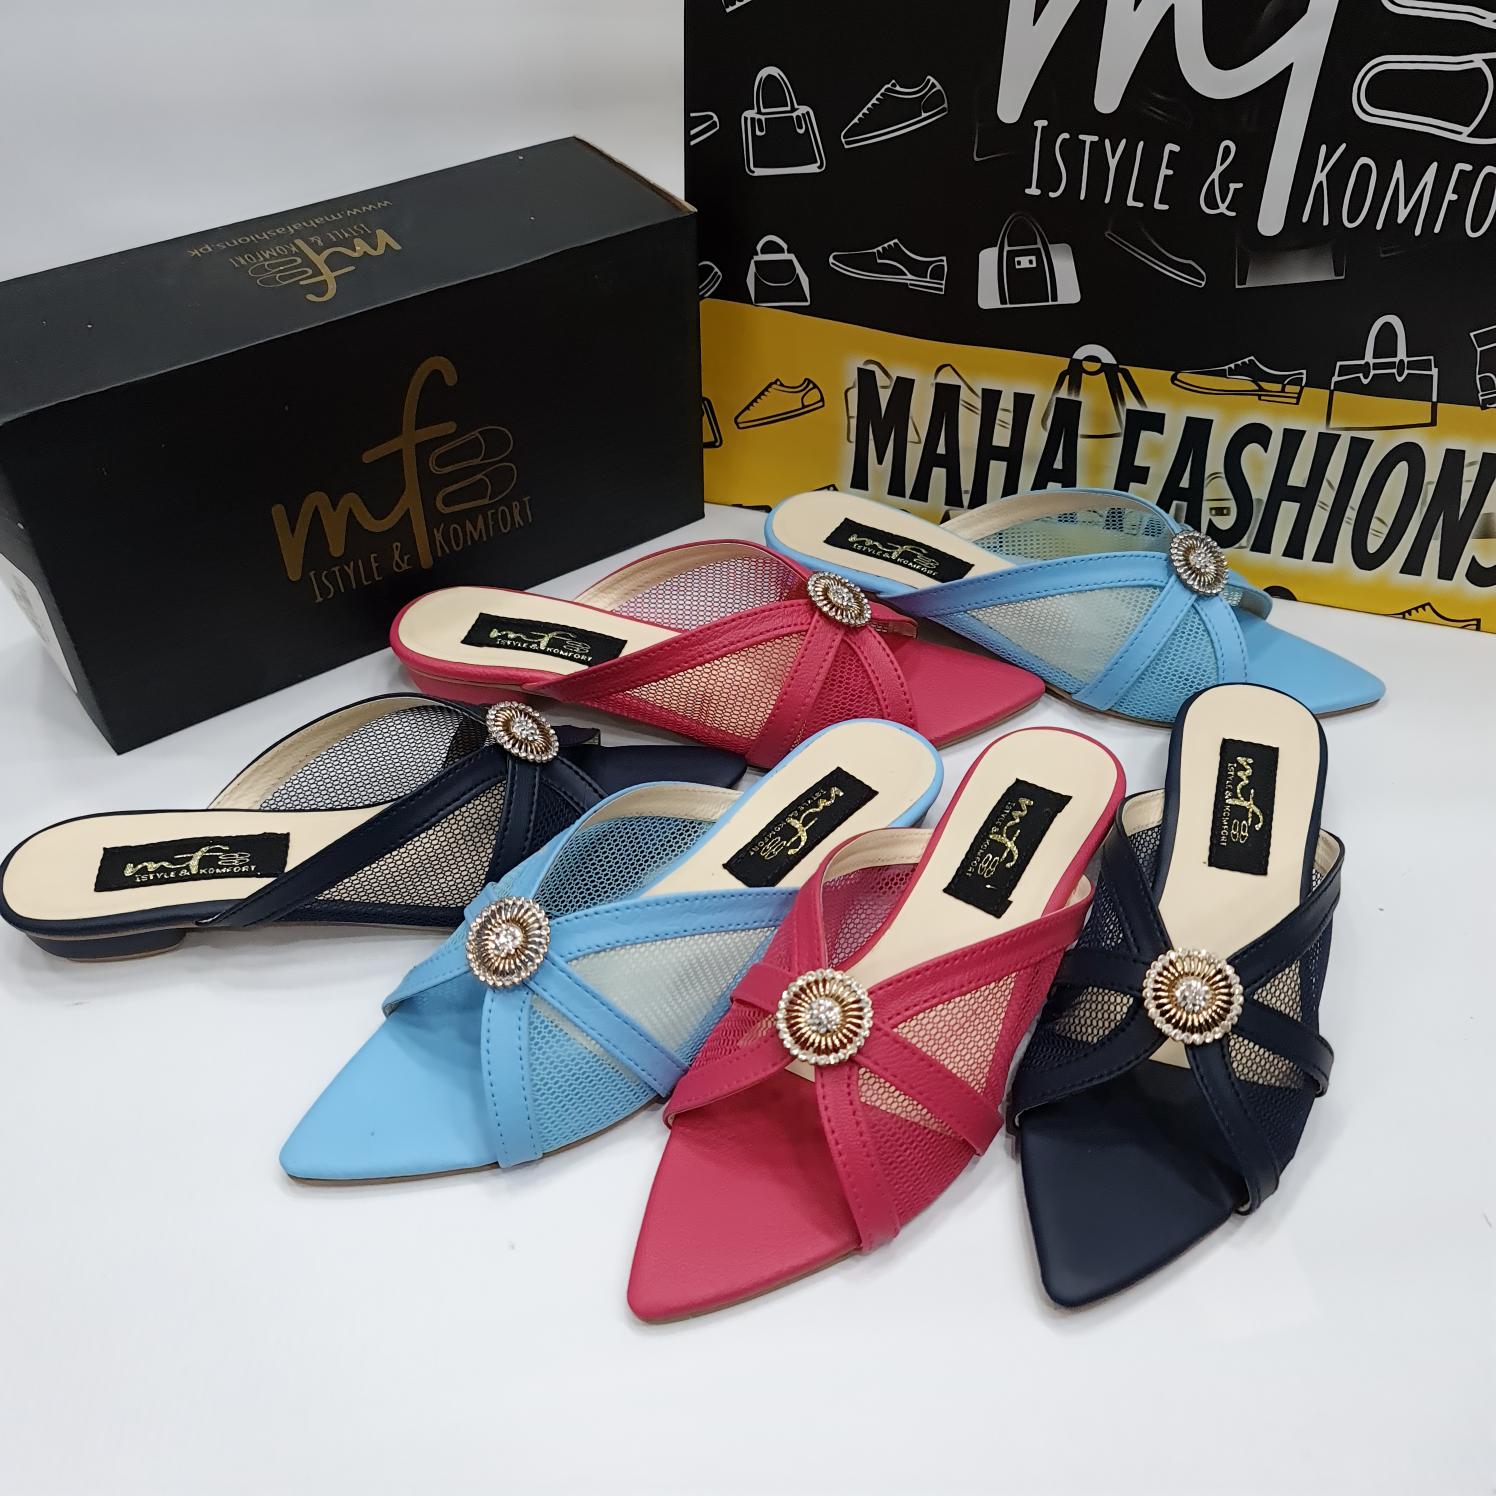 FH-081 - Maha fashions -  